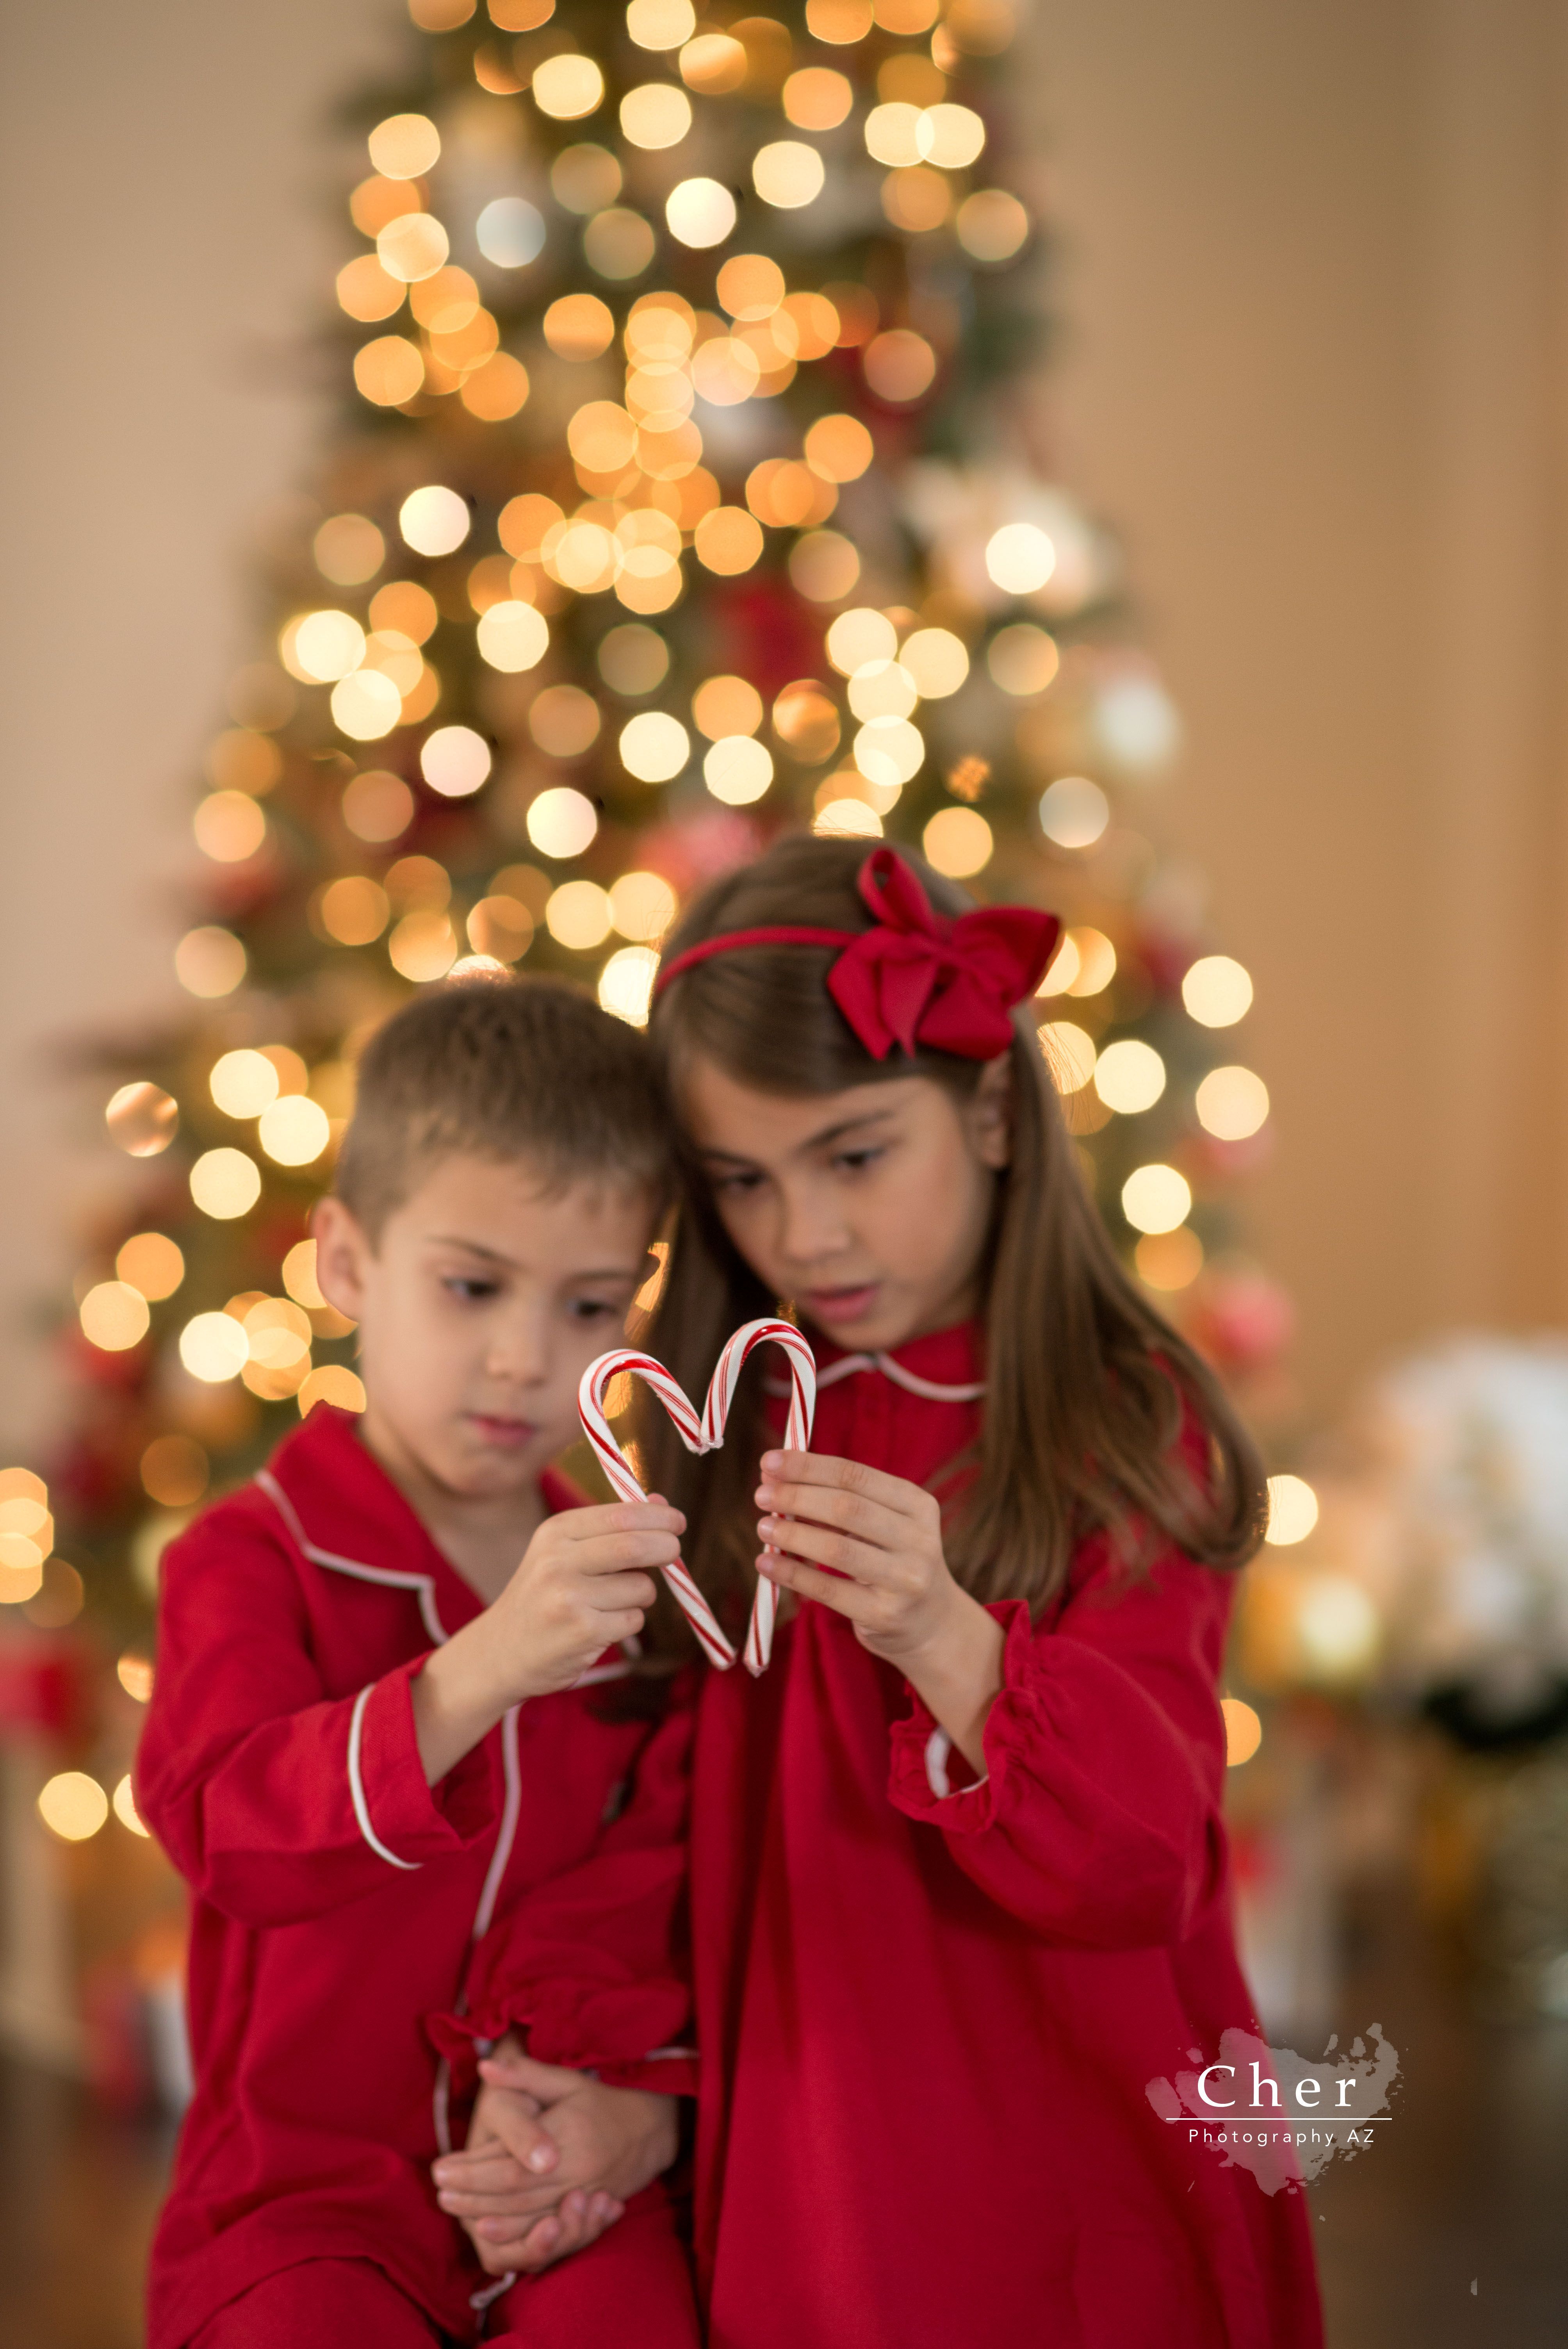 Cher Photography AZ -   15 christmas photoshoot kids siblings ideas